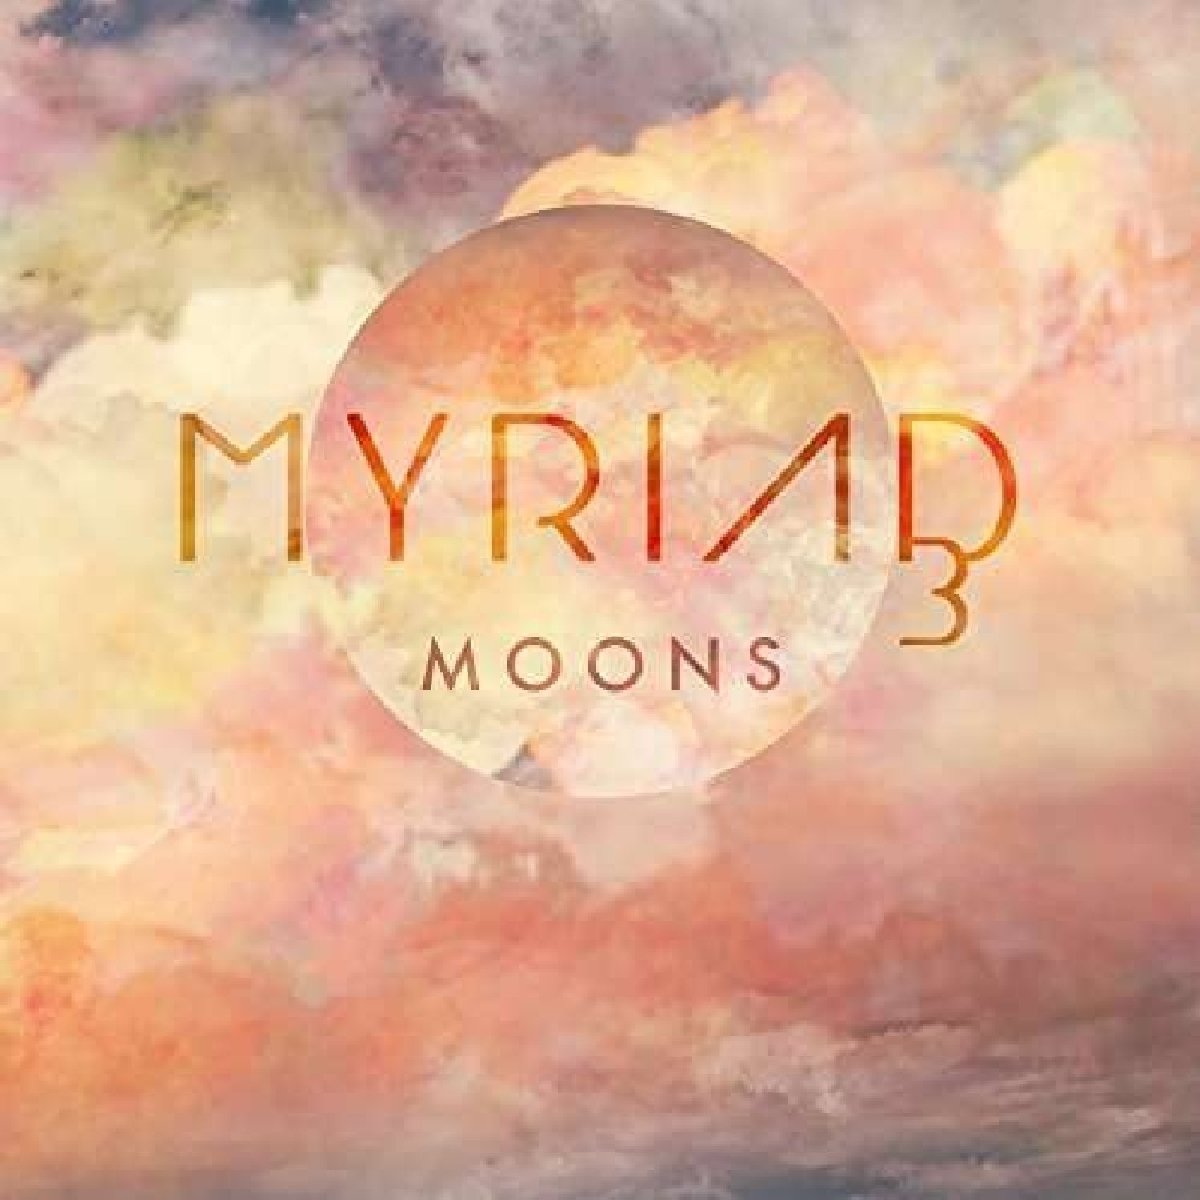 Myriad3 - Moons (2016) [FLAC 24bit/192kHz]